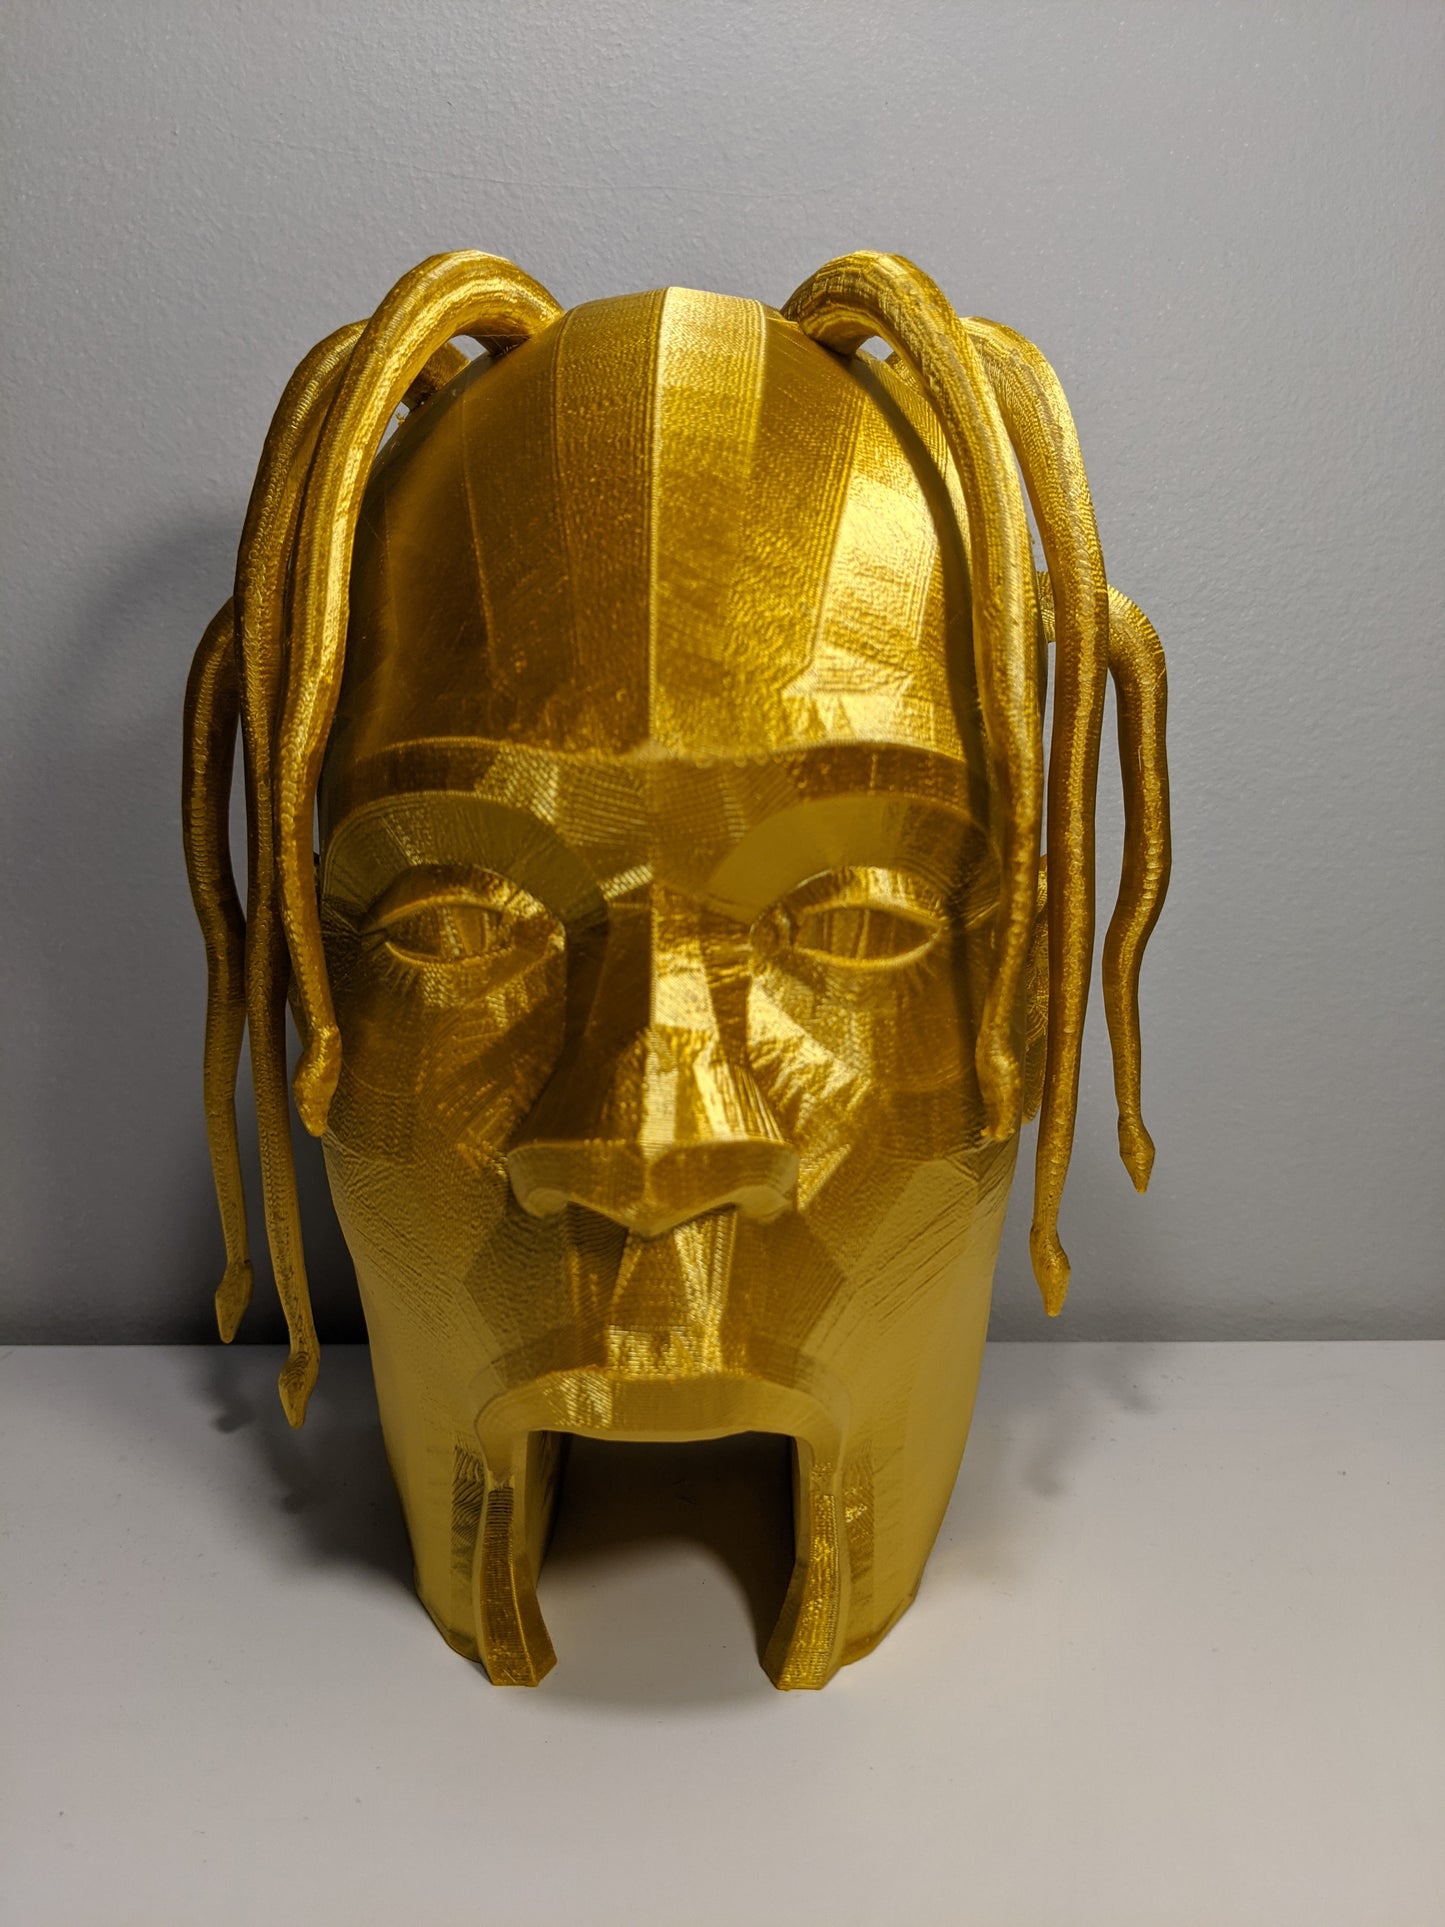 Travis Scott Astro World 3D Printed Head